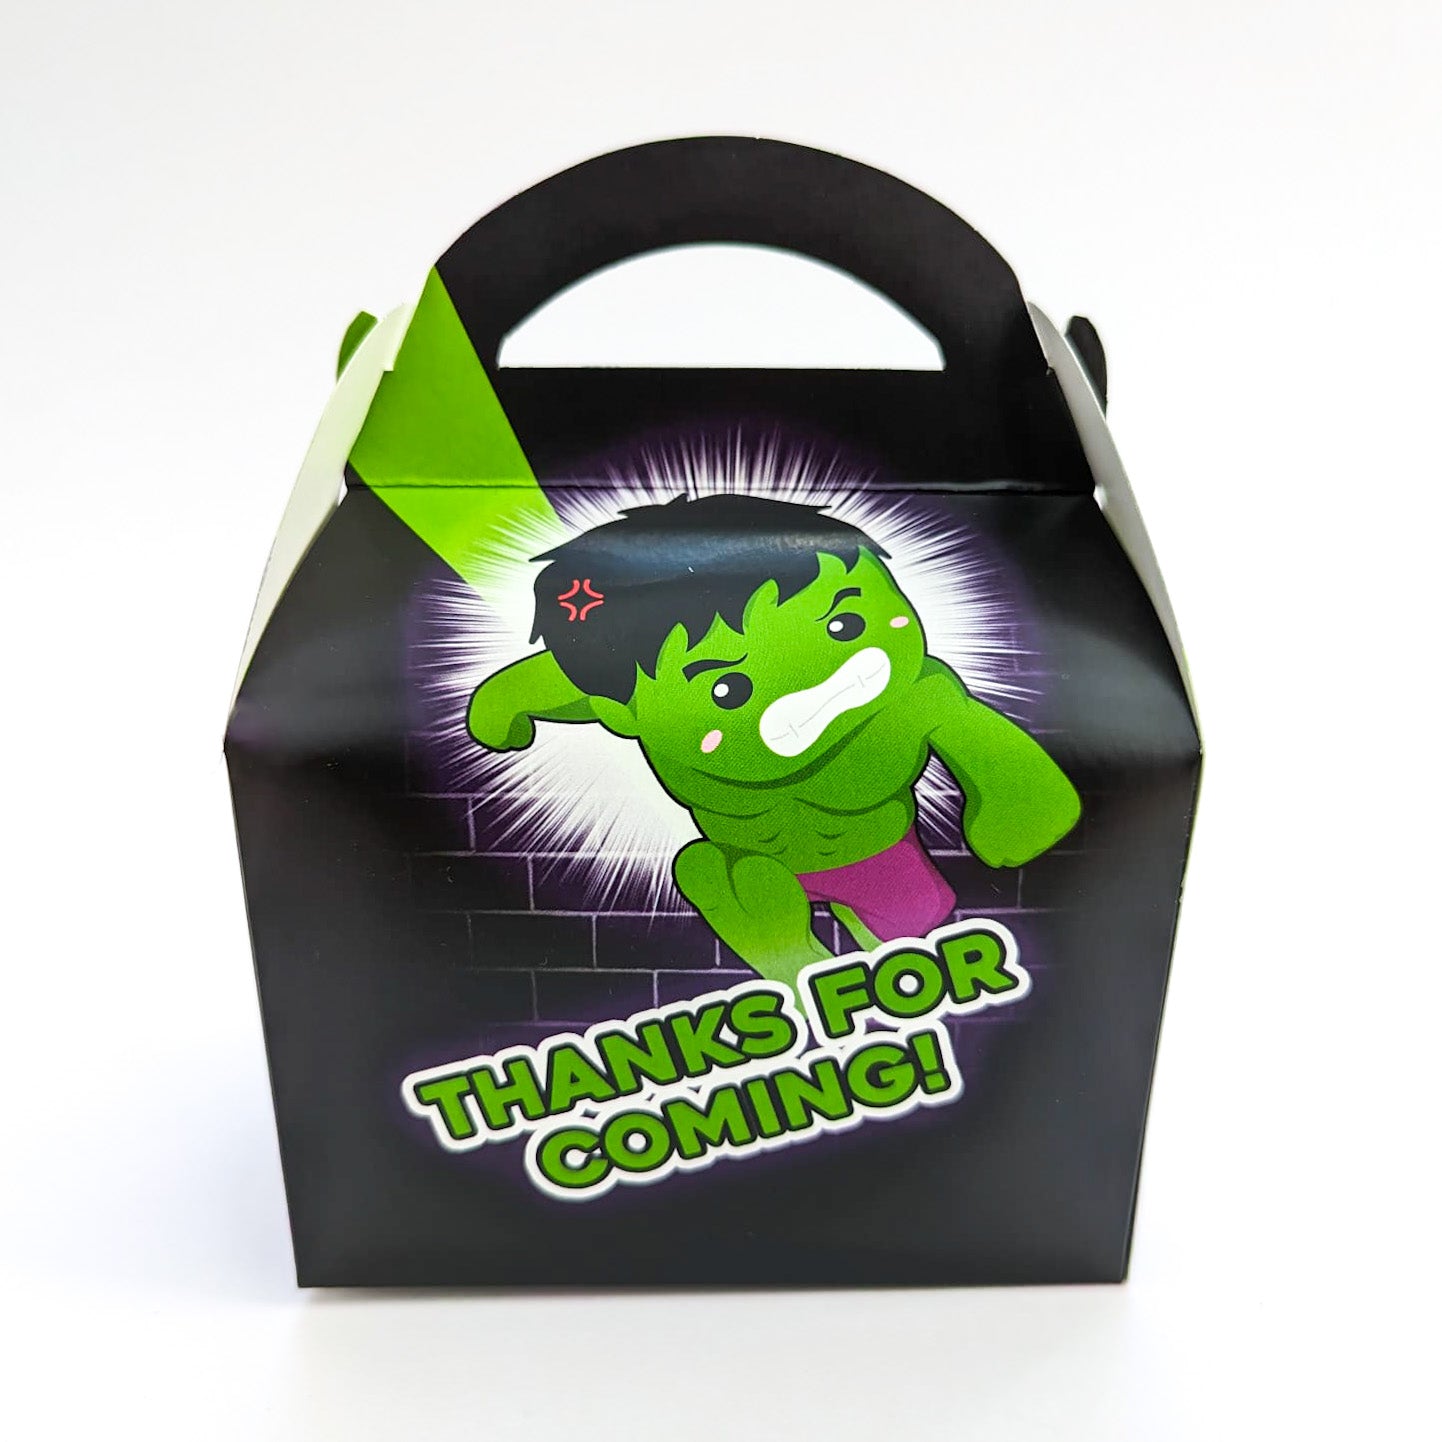 SUPERHERO Hulk inspired boys Personalised Children’s Party Box Gift Bag Favour